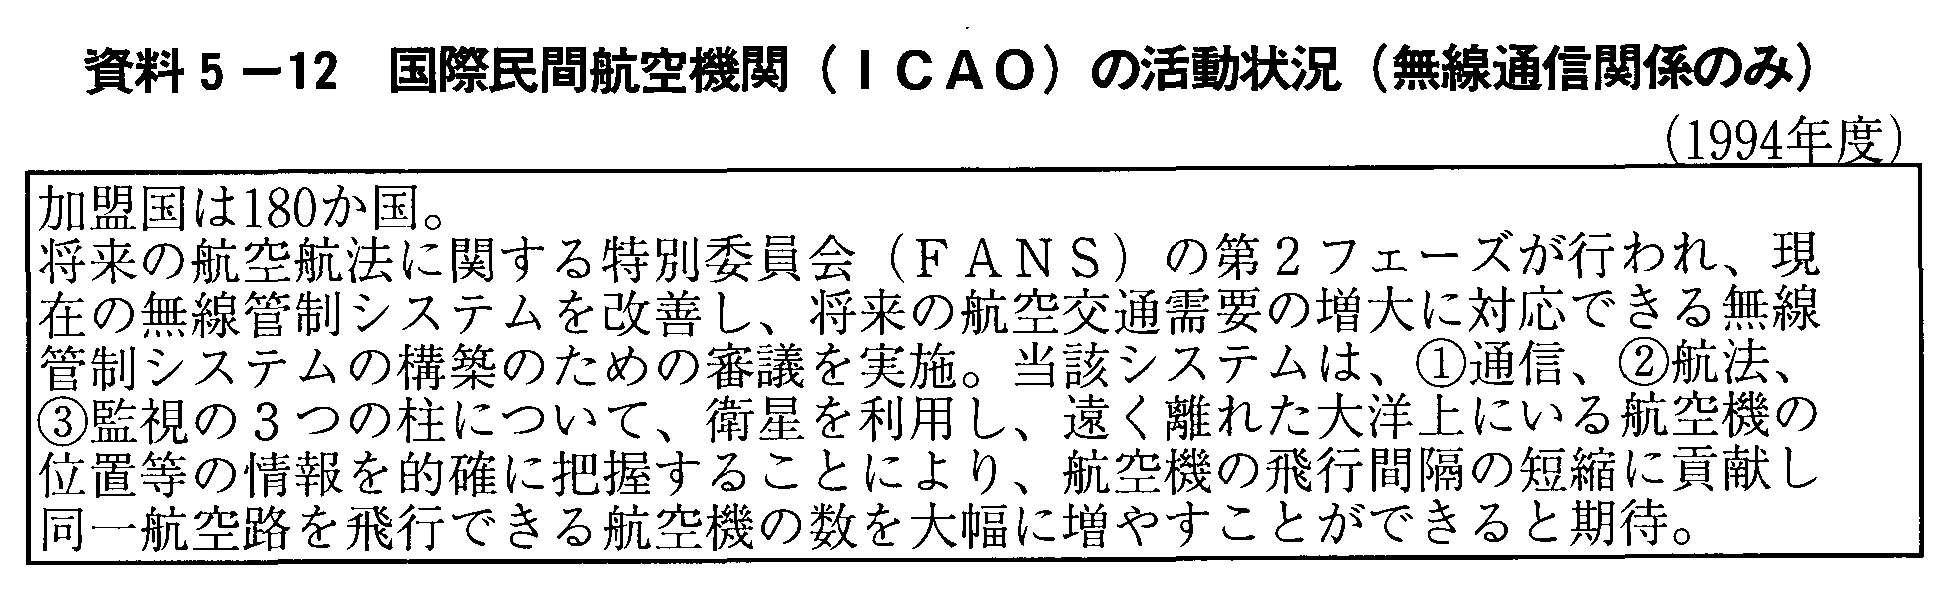 5-12 ۖԍq@(ICAO)̊(ʐM֌Ŵ)(1994Nx)